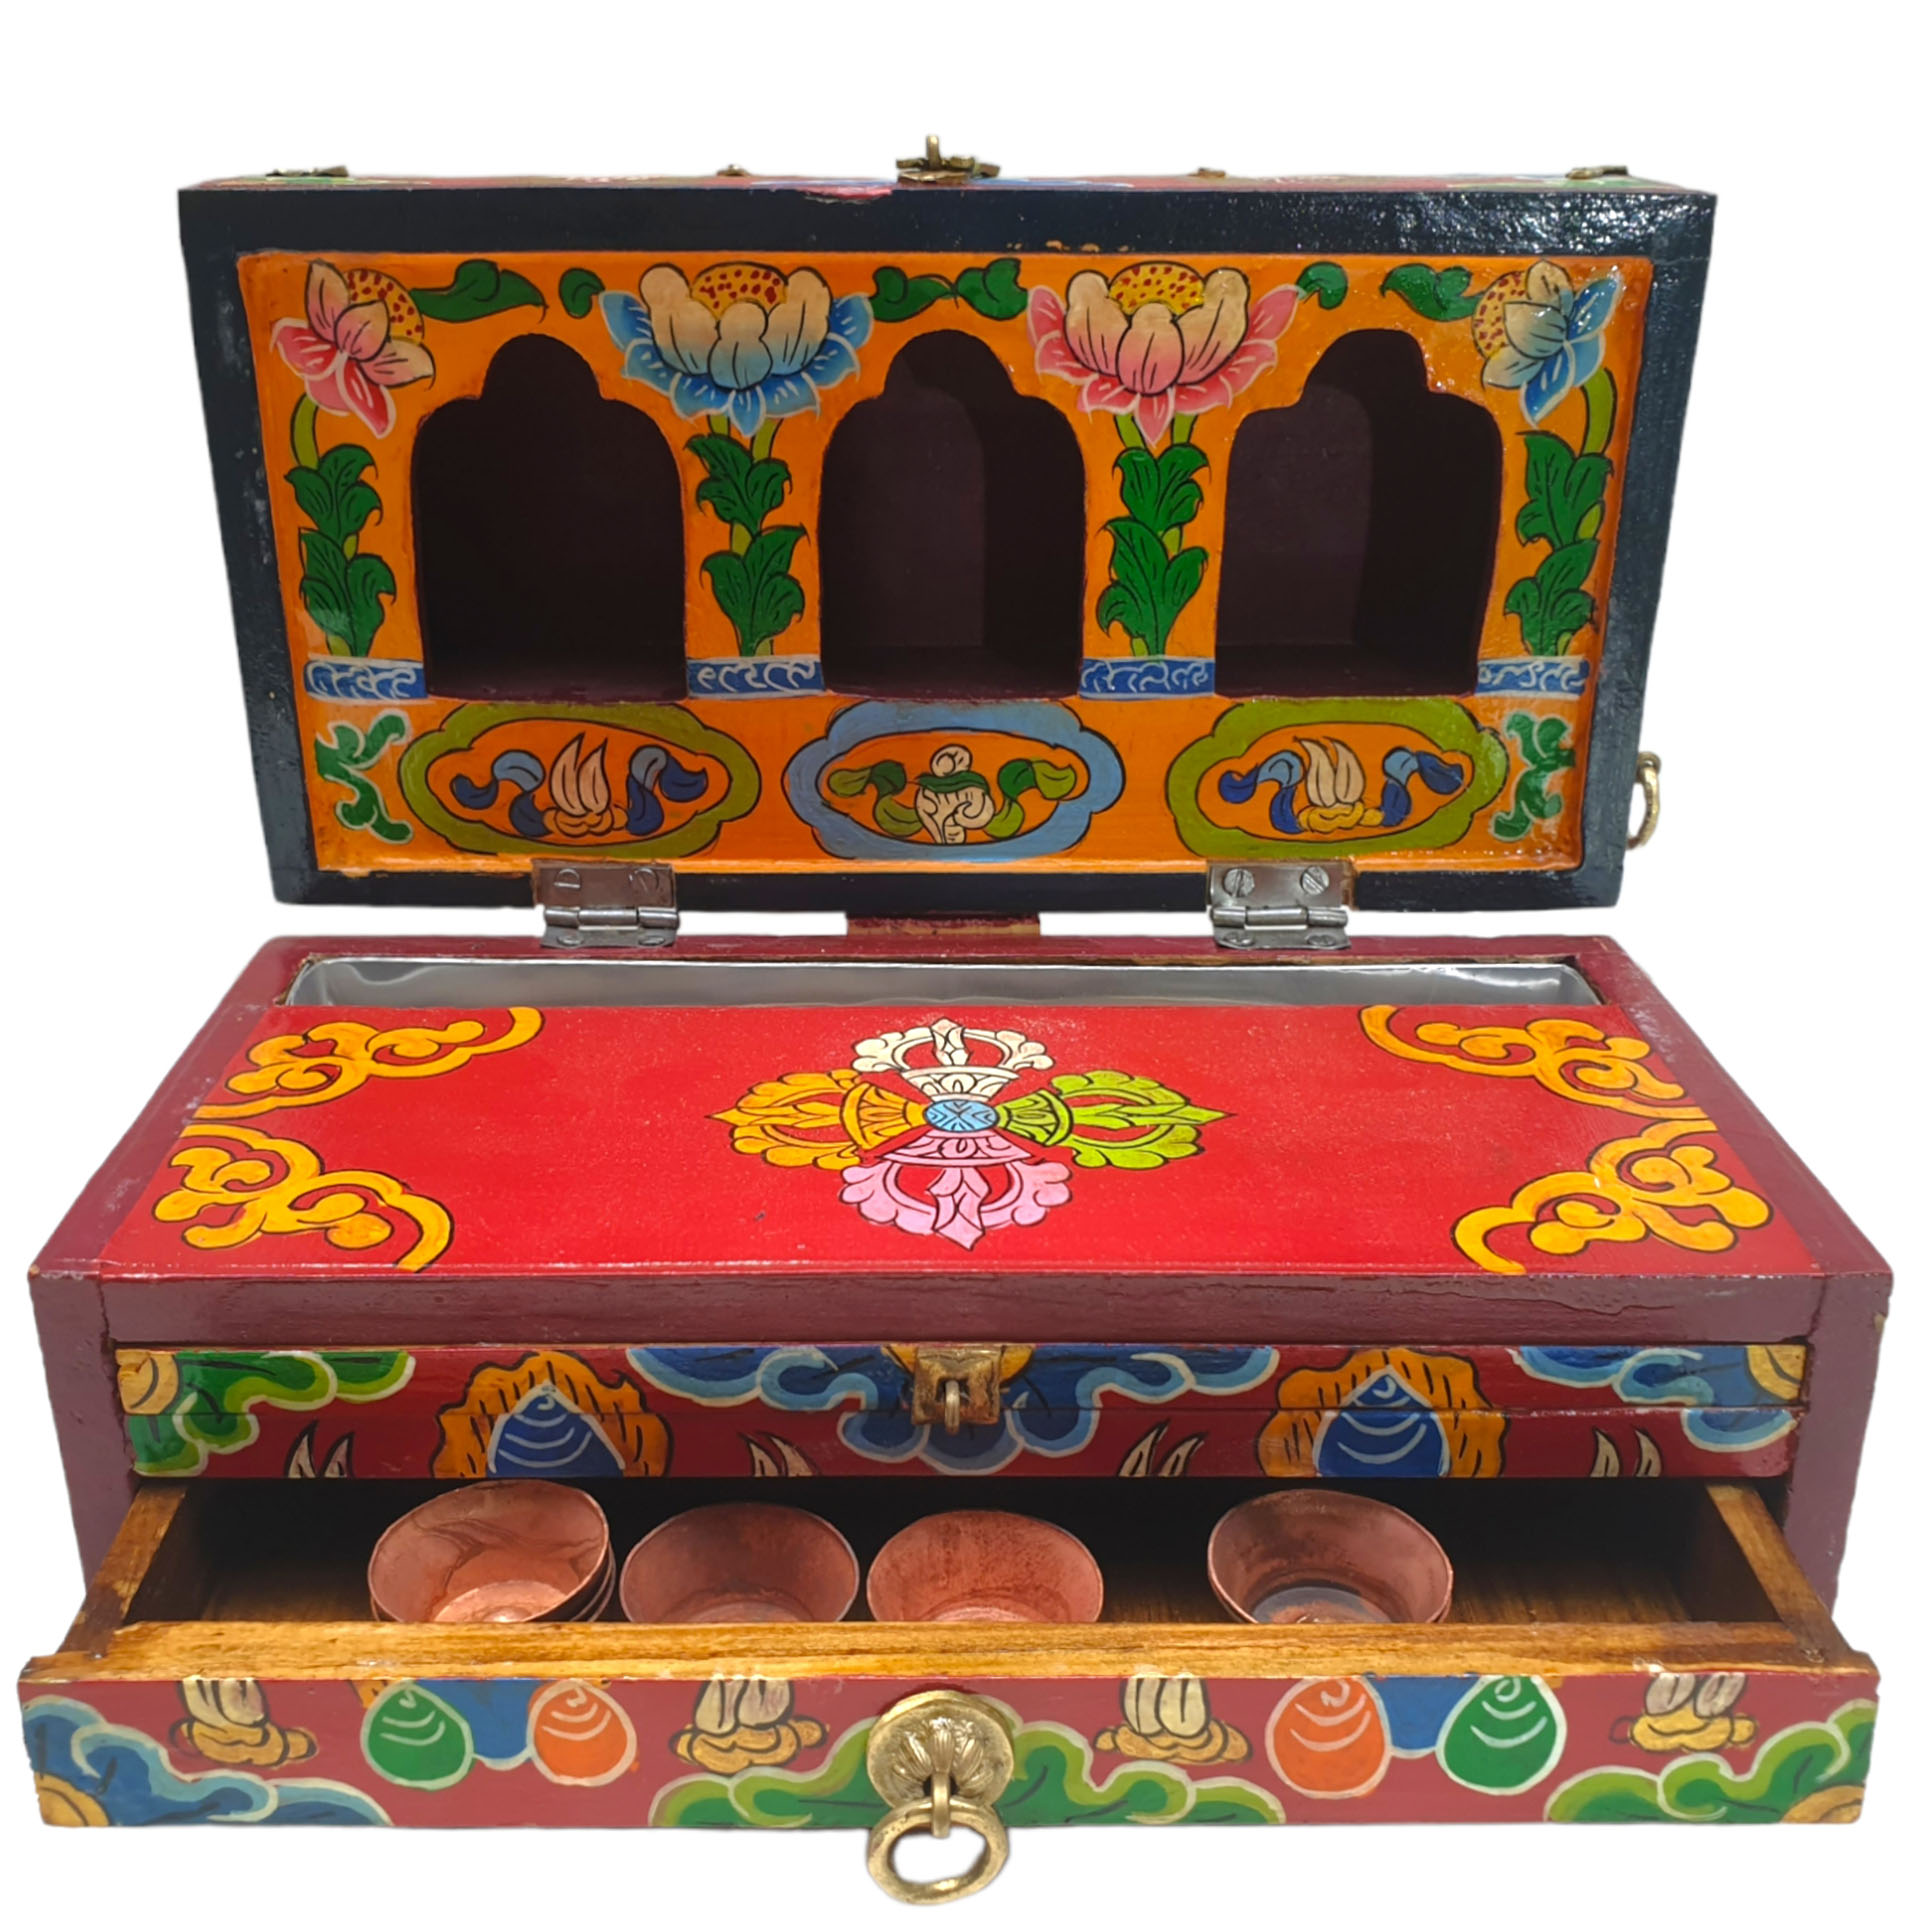 Buddhist Handmade Wooden Traveling Altar chesum Box, foldable, With Fourteen Important Bodhisattvas And Buddhas